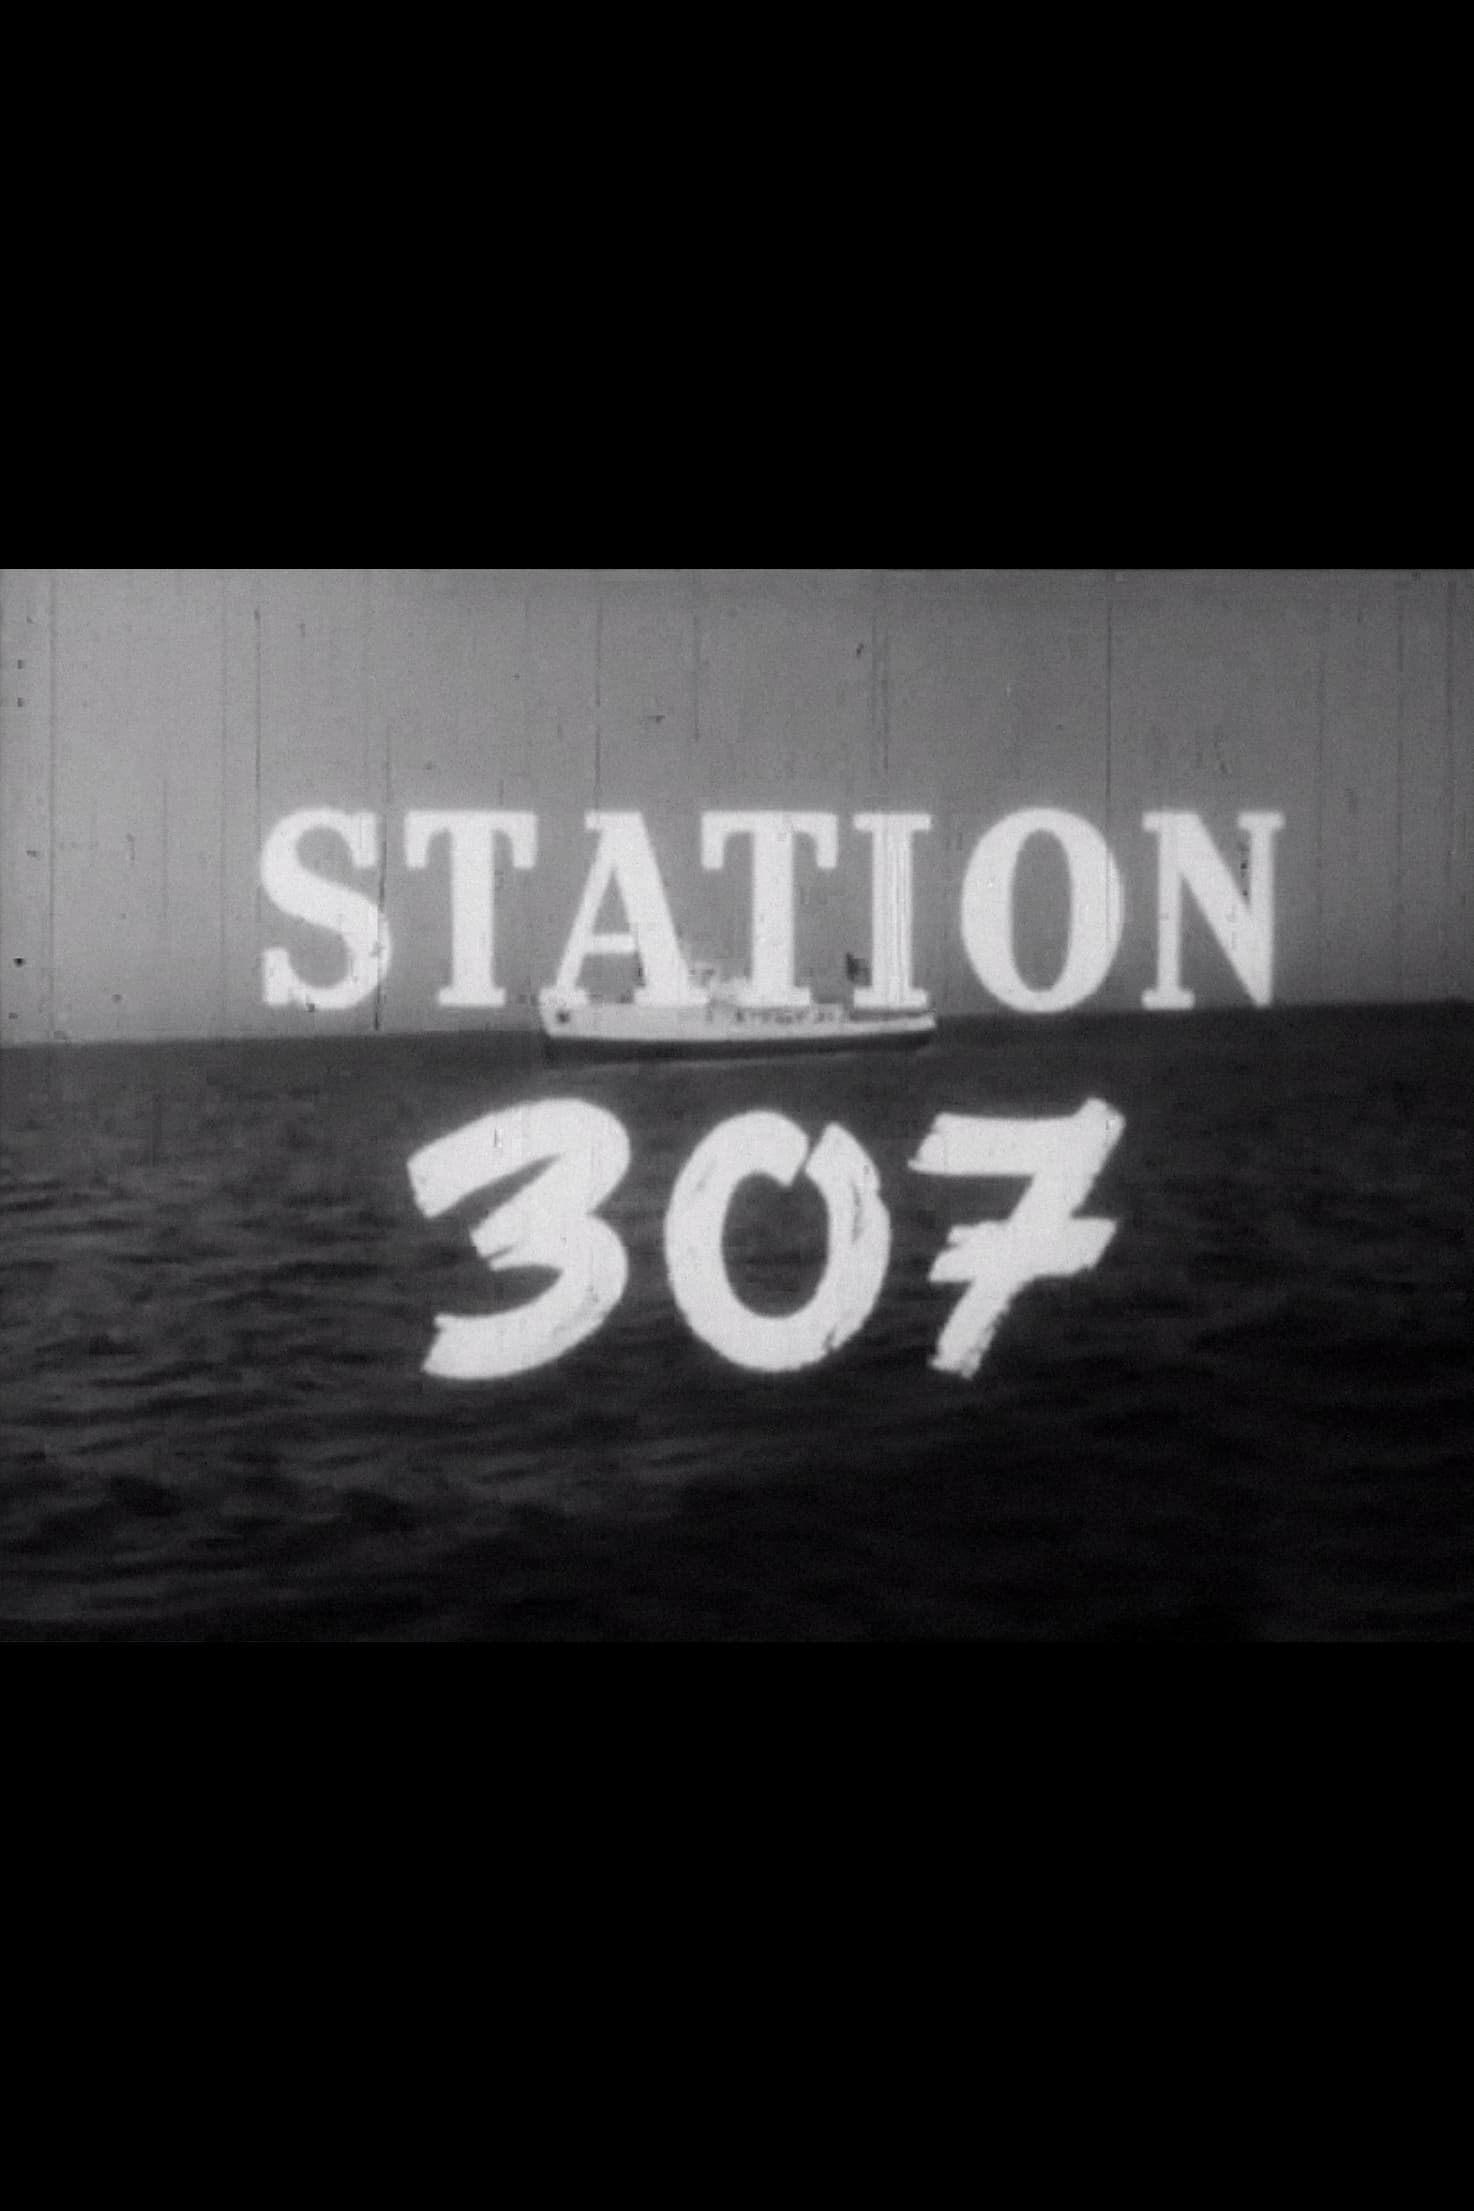 Station 307